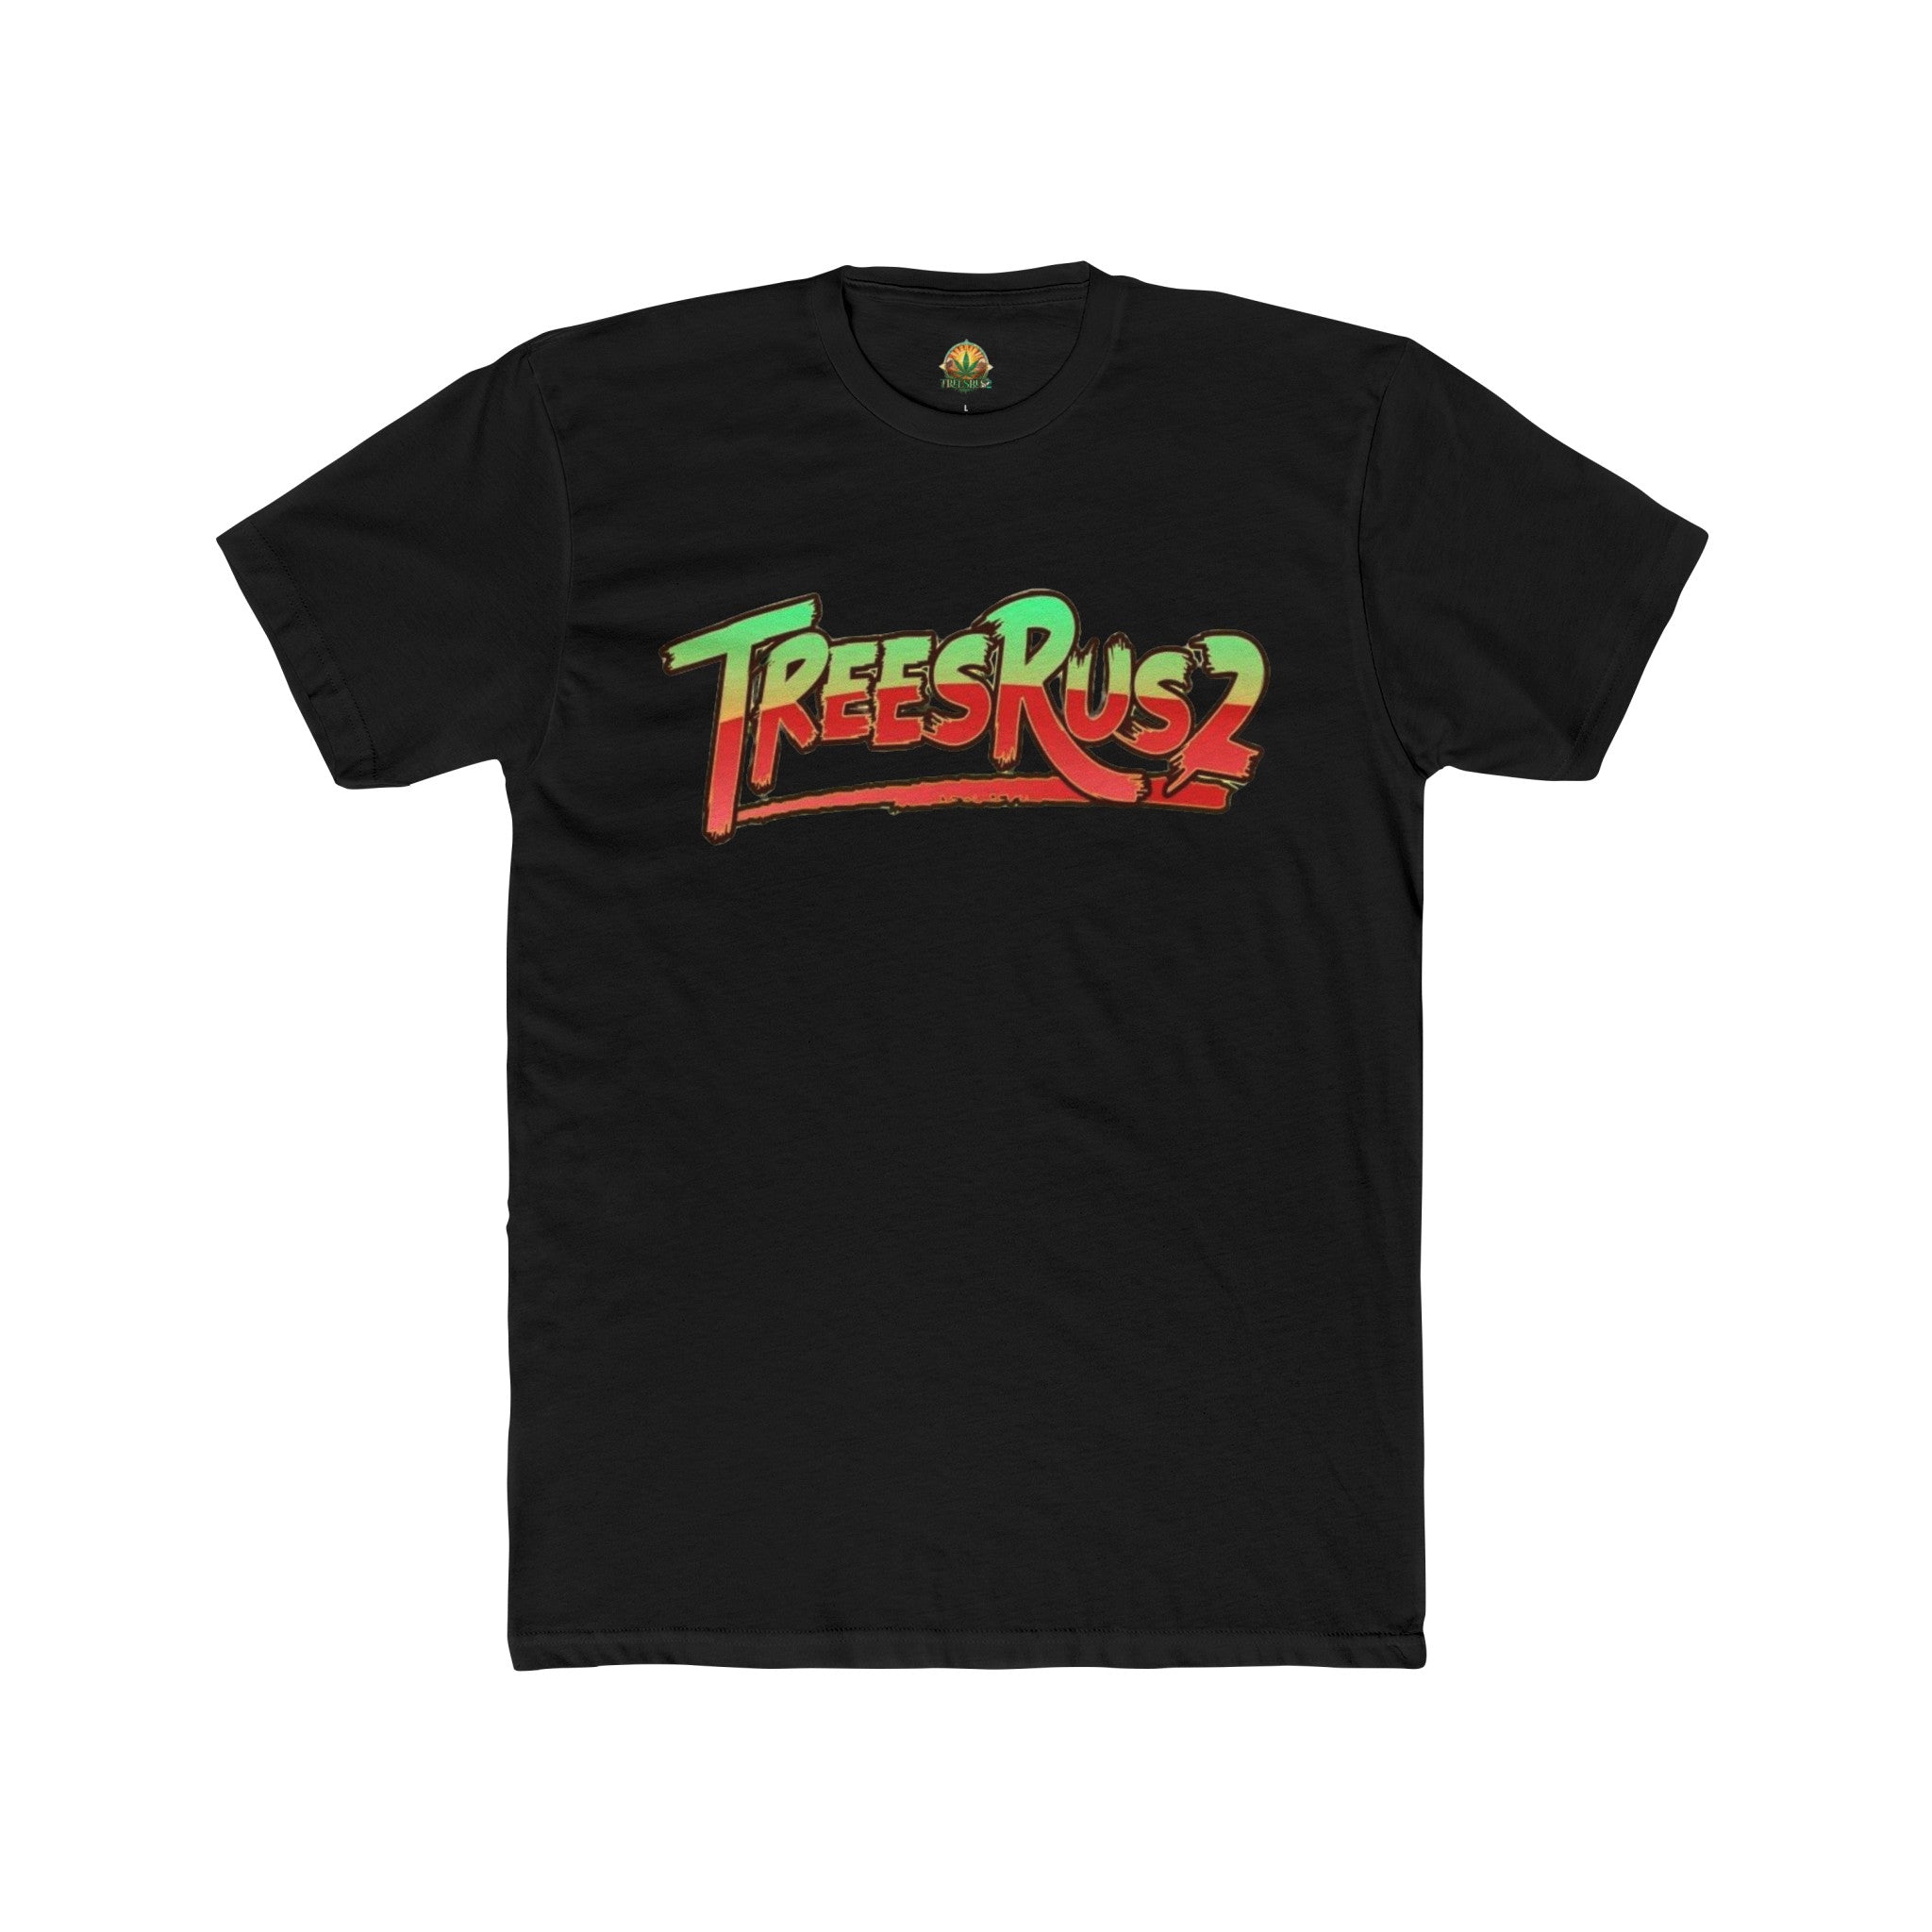 Stacked logo Tee - TreesRus2 Clothing